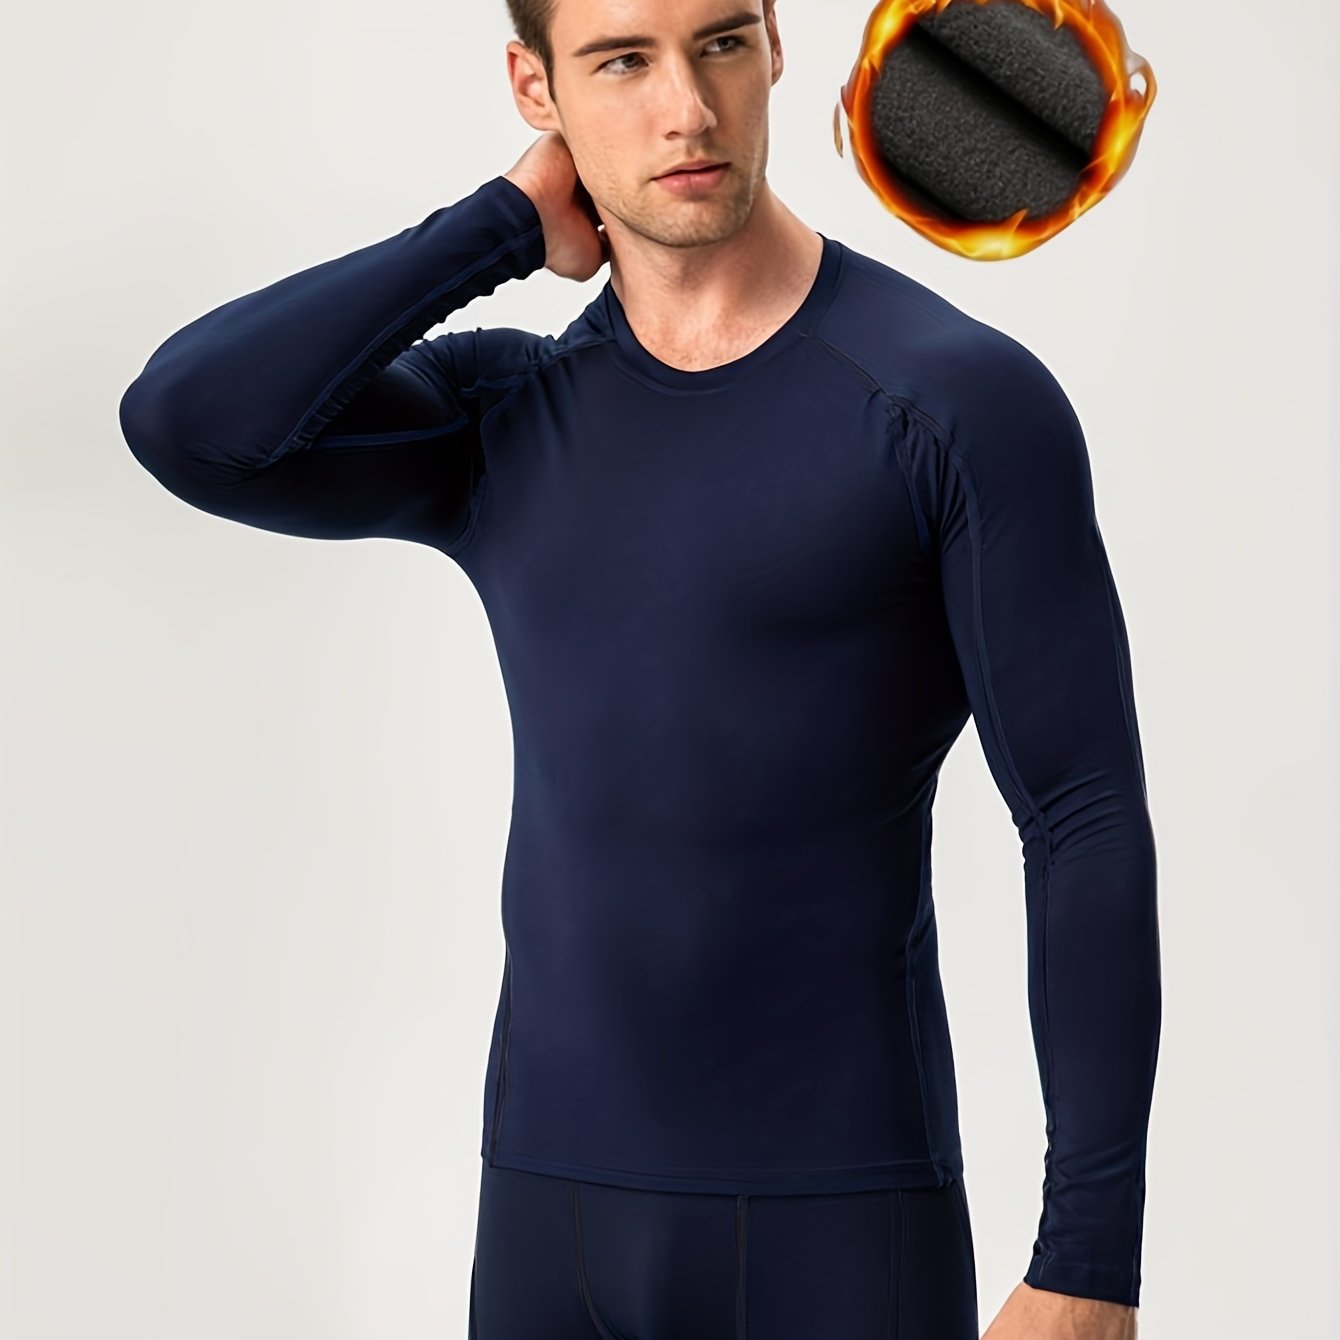 Men's Ultra Soft Tagless Fleece Lined Thermal Top & Bottom Long